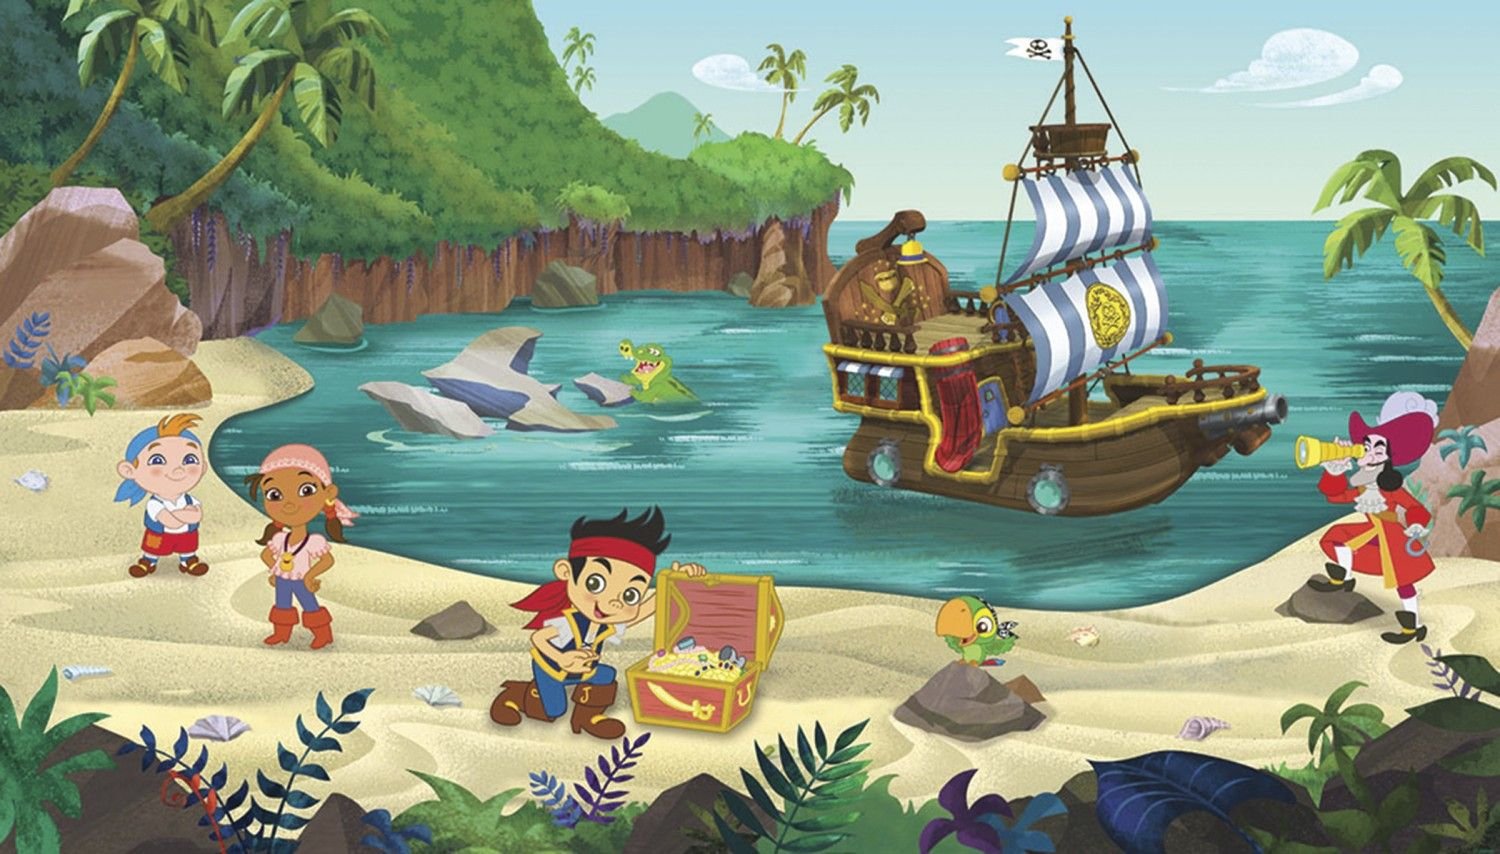 Jake and the Neverland Pirates